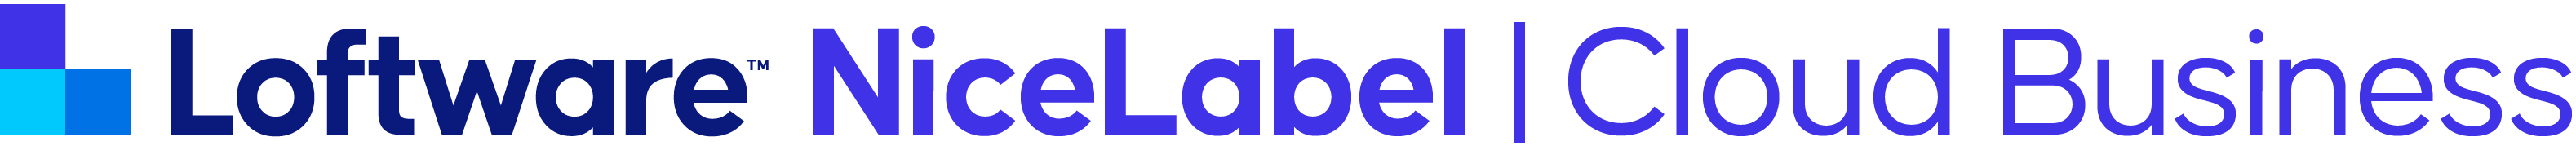 logo nicelabel cloud business